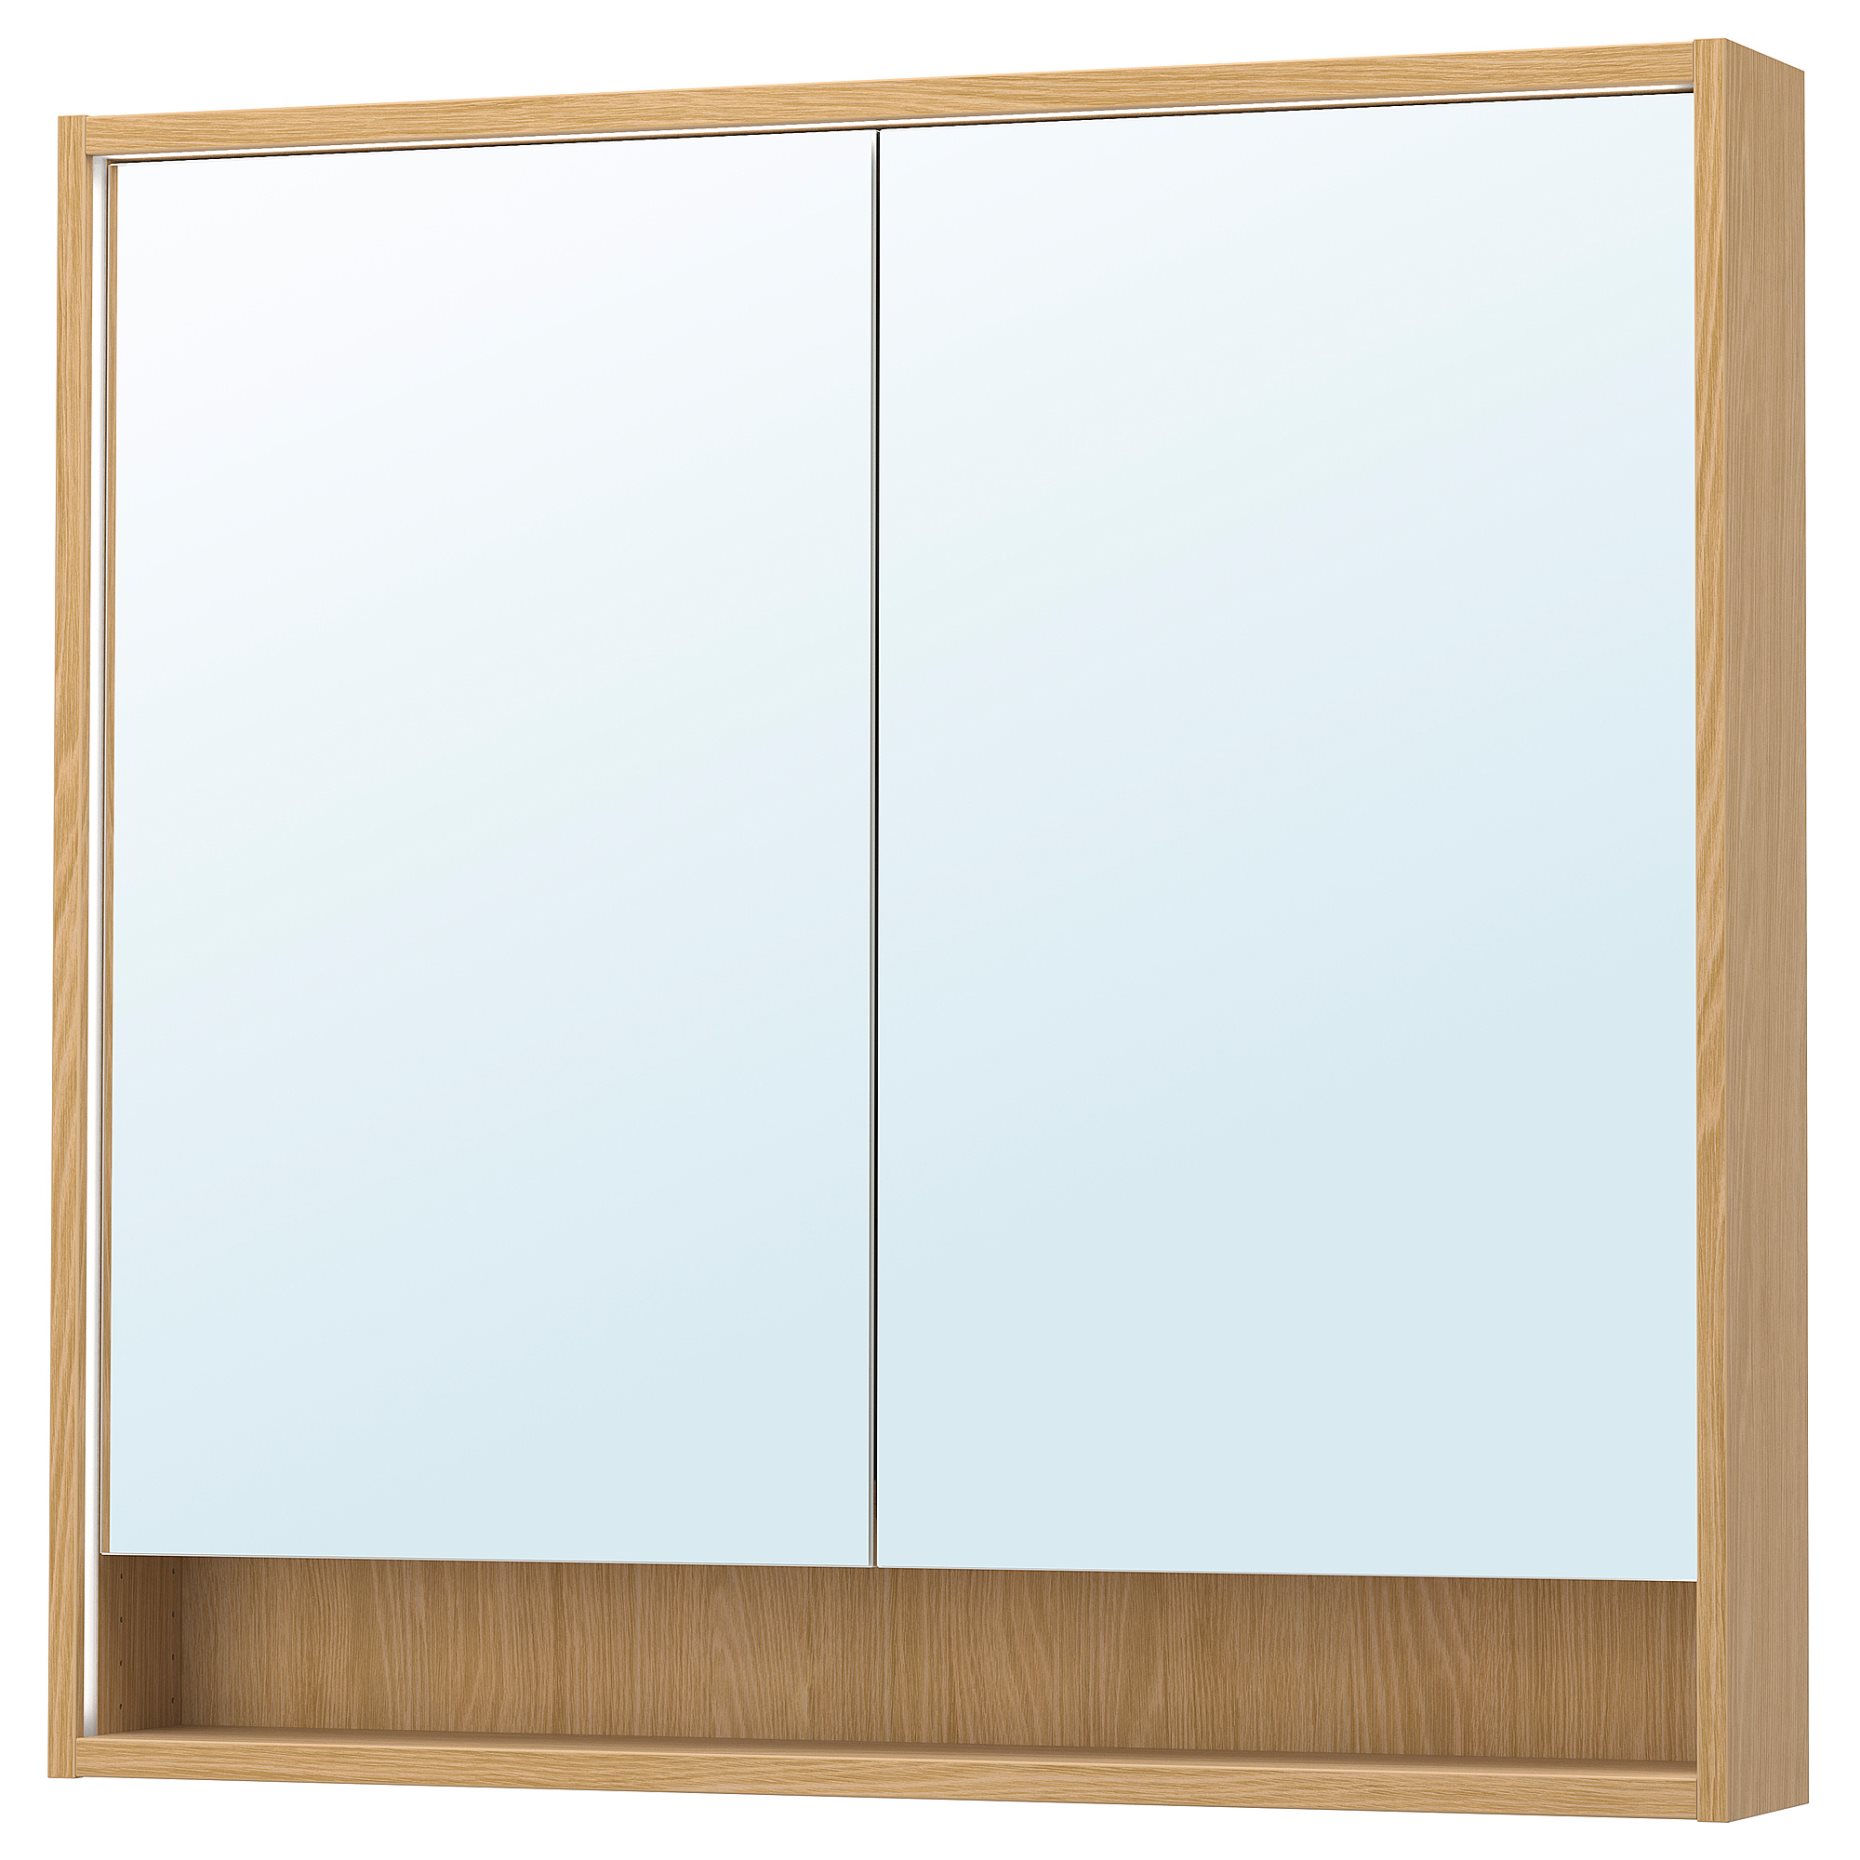 FAXALVEN, mirror cabinet with built-in lighting, 100x15x95 cm, 205.449.82